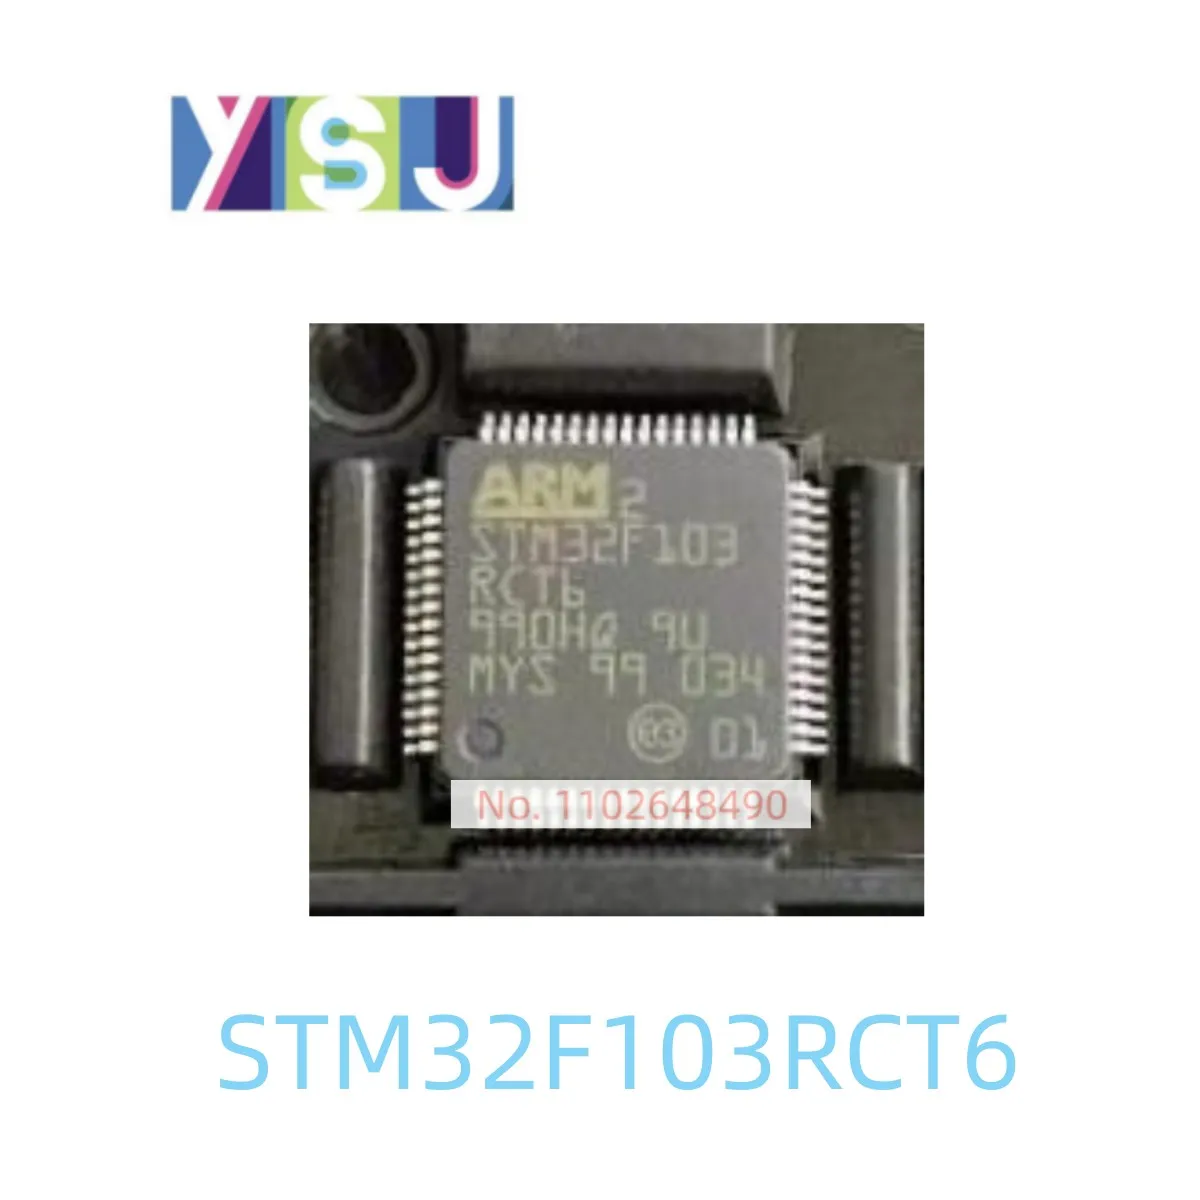 

STM32F103RCT6 IC Brand New Microcontroller Encapsulation64-LQFP